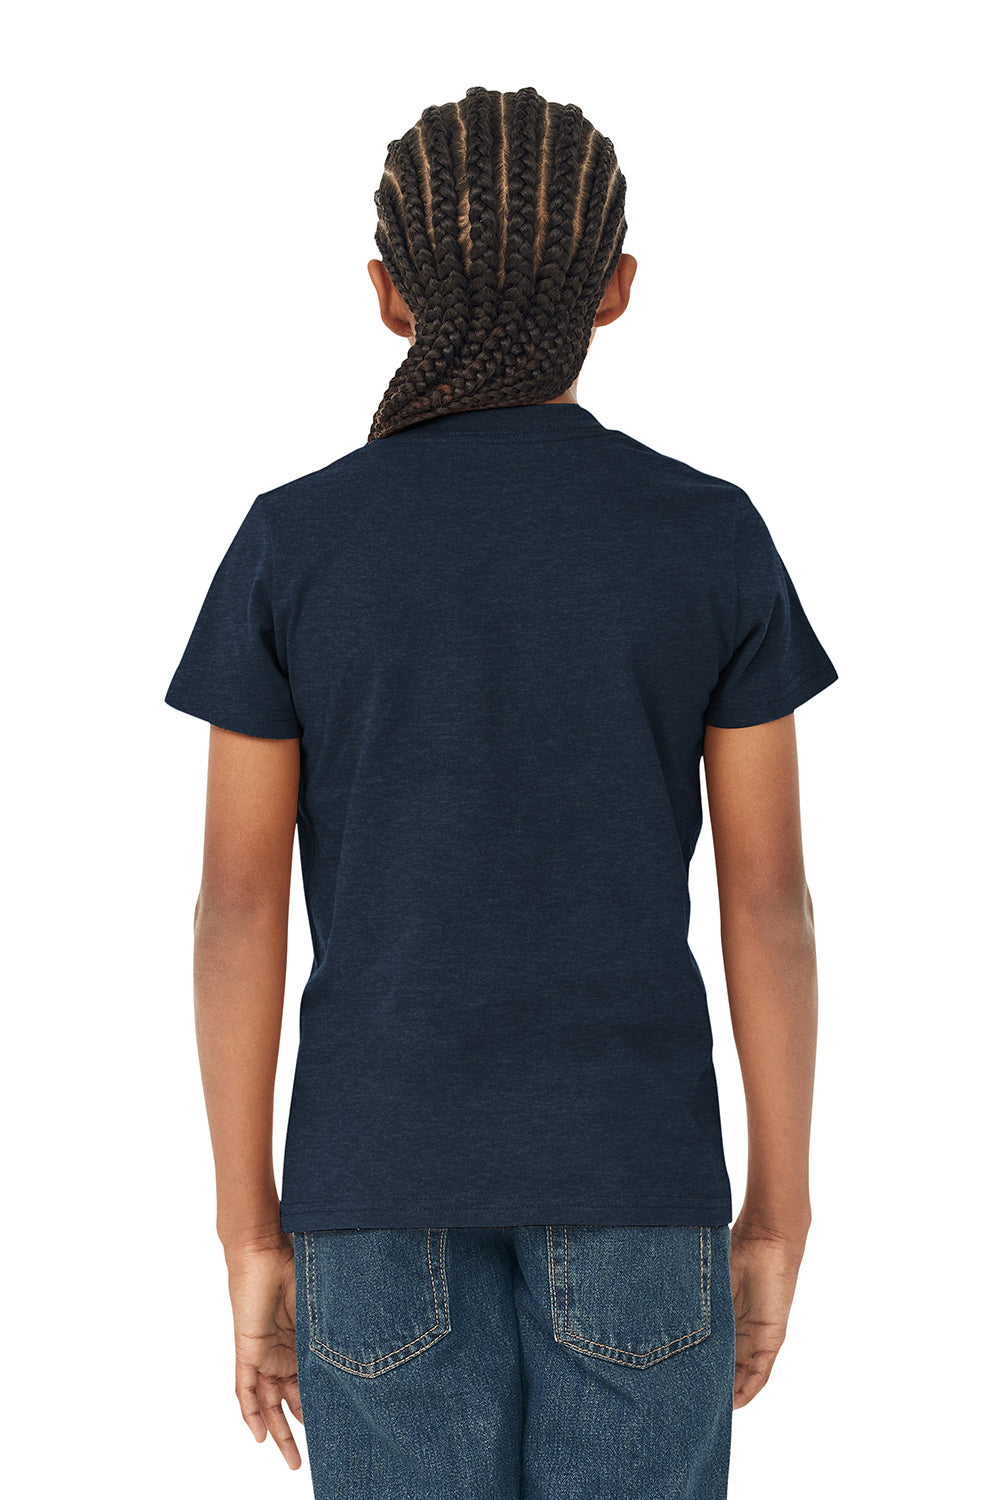 Bella + Canvas 3001Y Youth Jersey Short Sleeve Crewneck T-Shirt Heather Navy Blue Model Back